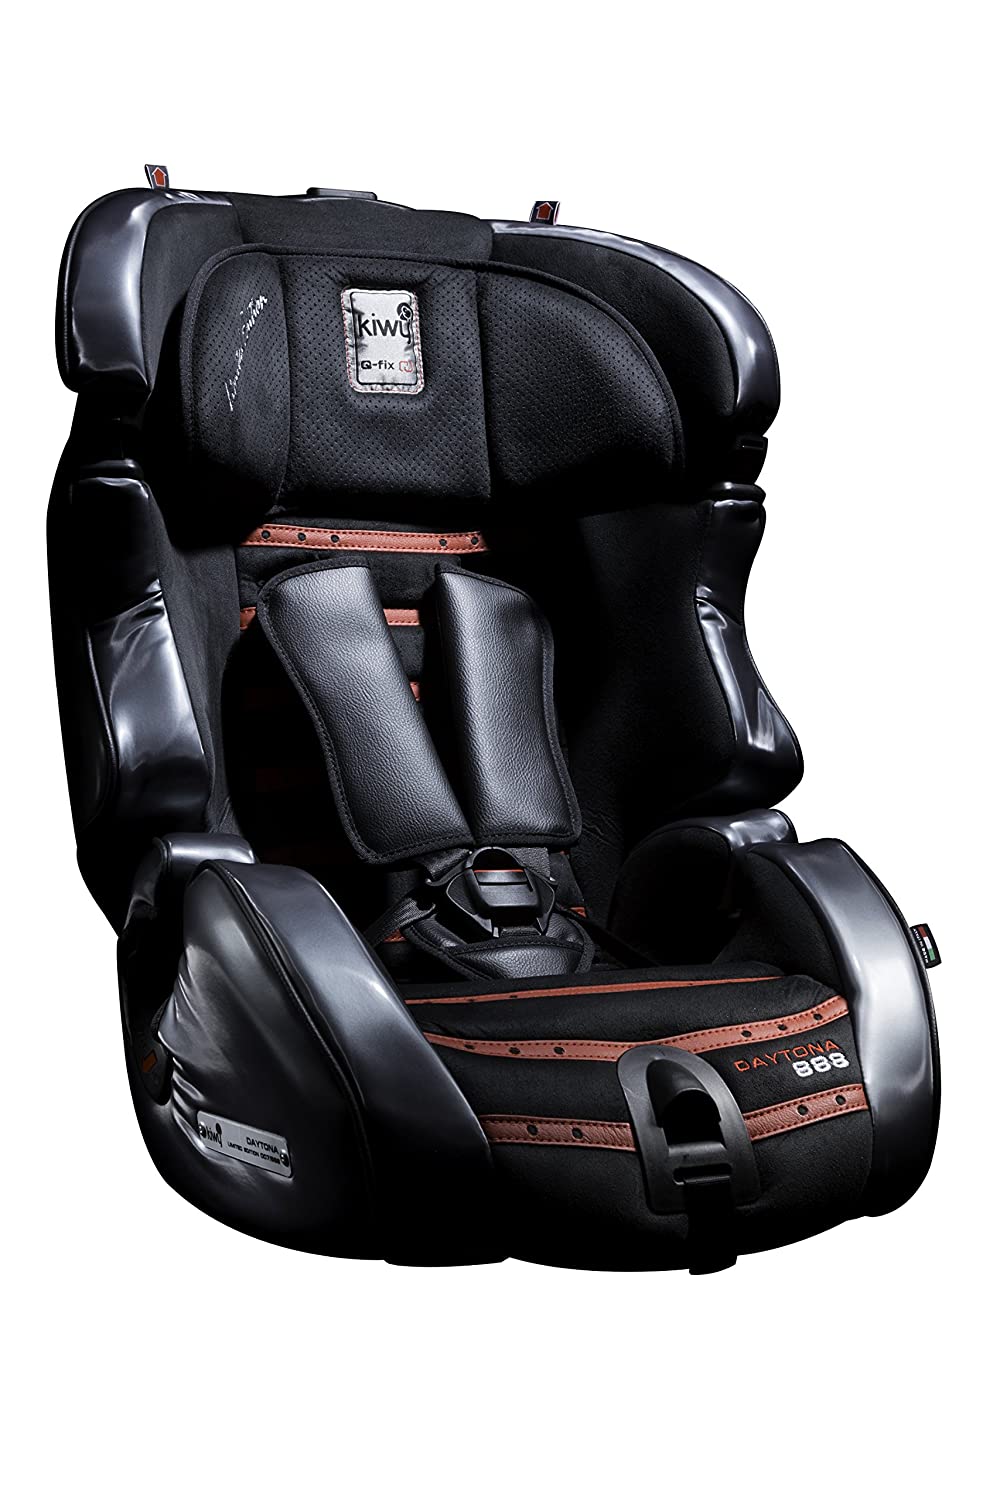 Kiwy 14103Dy01B Child Car Seat Daytona 888. Slf123 With Q-Fix Adapter Kit, 